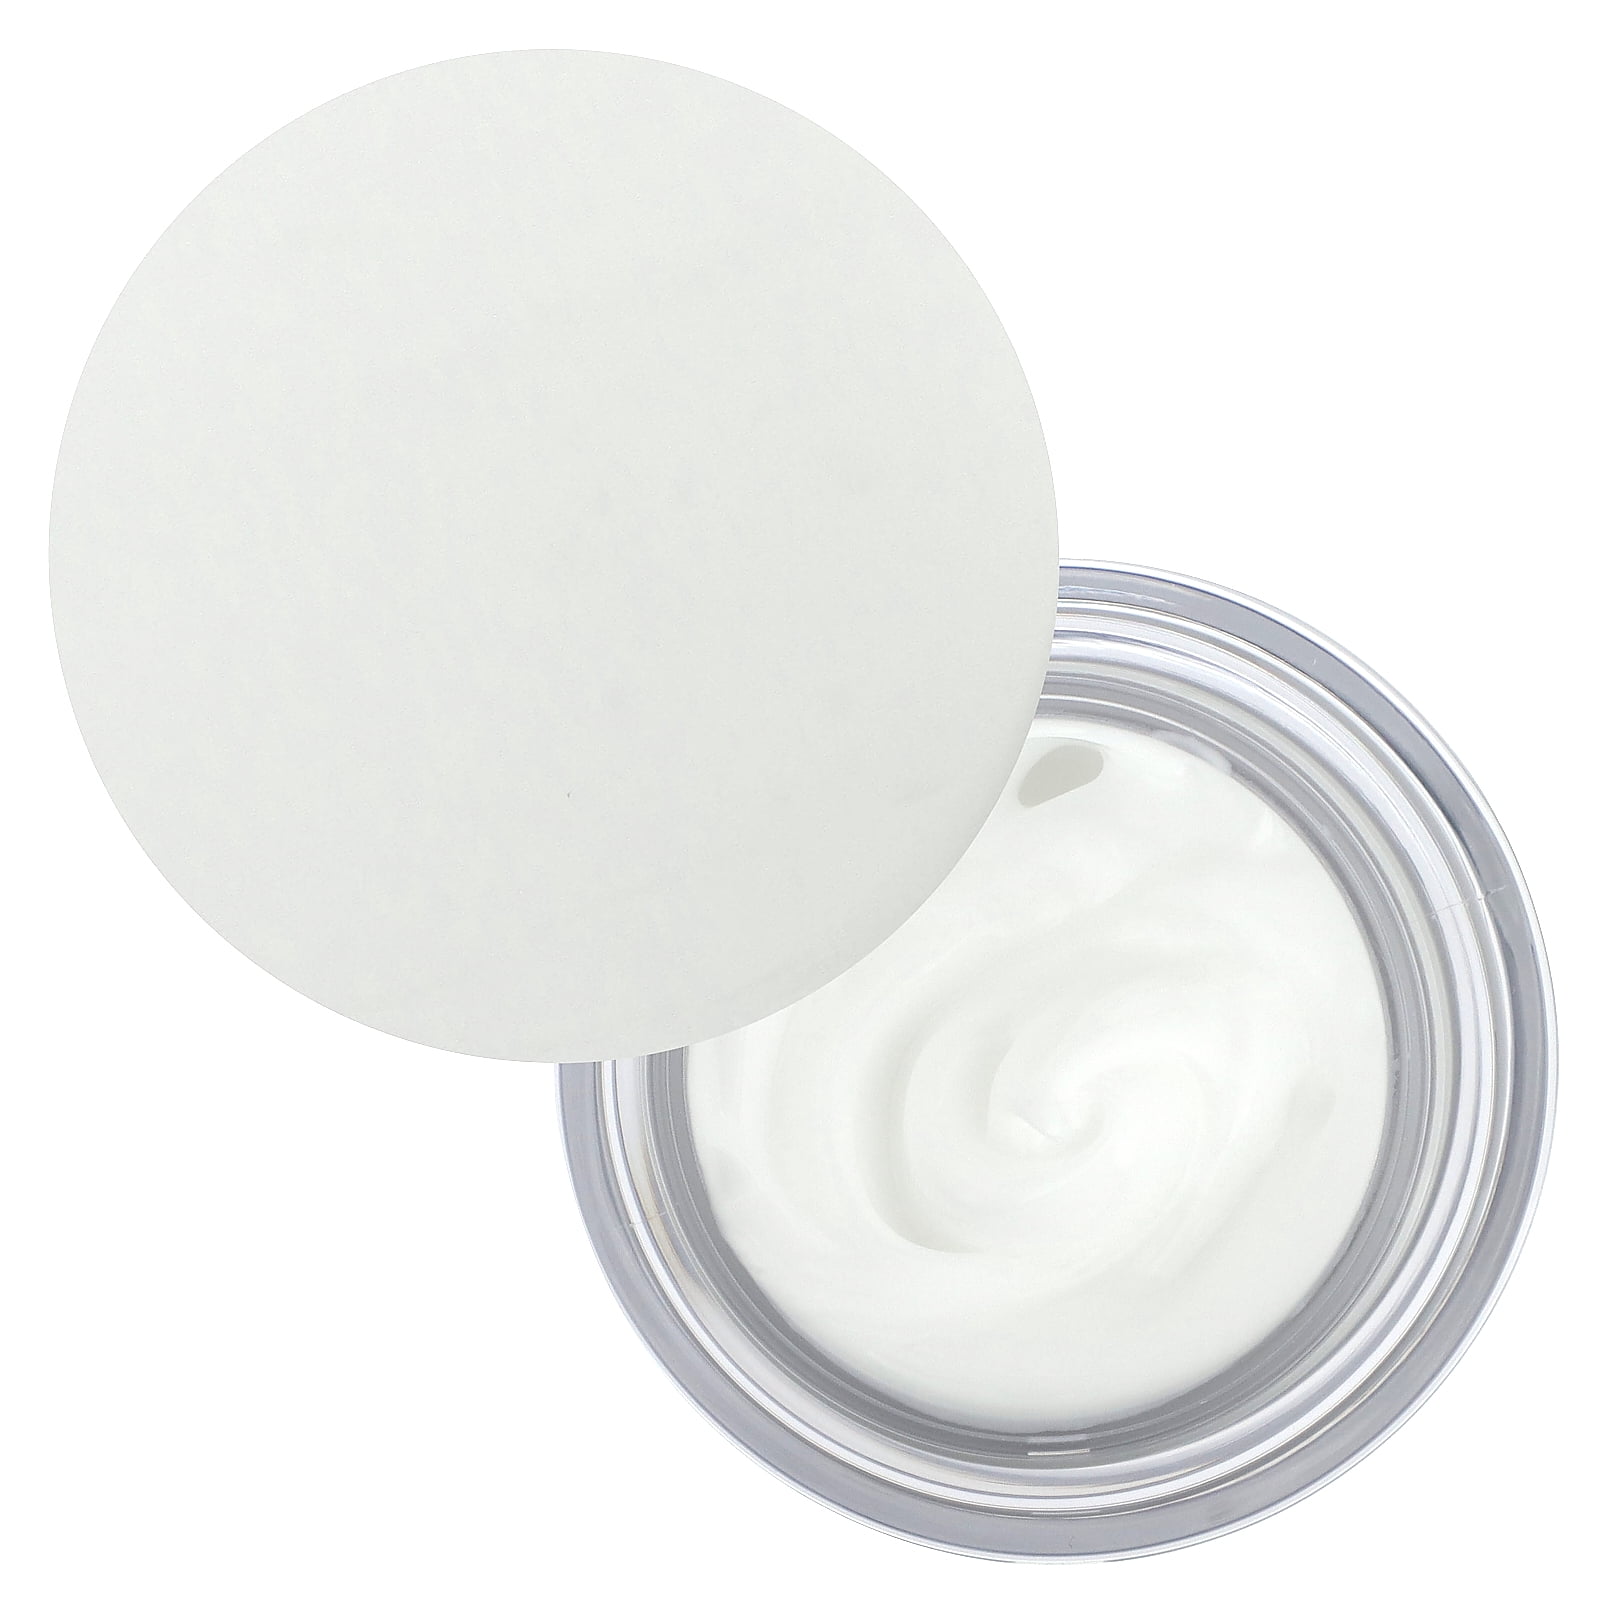 AMPLE:N Hyaluron Shot Eye Cream Hyaluronic Acid Moisturizing Eye Cream to  Smooth Skin Texture - Minimize Wrinkles & Dark Circles - Under Eye  Moisturizer with Caviar for Nourishment 0.85 fl.oz.